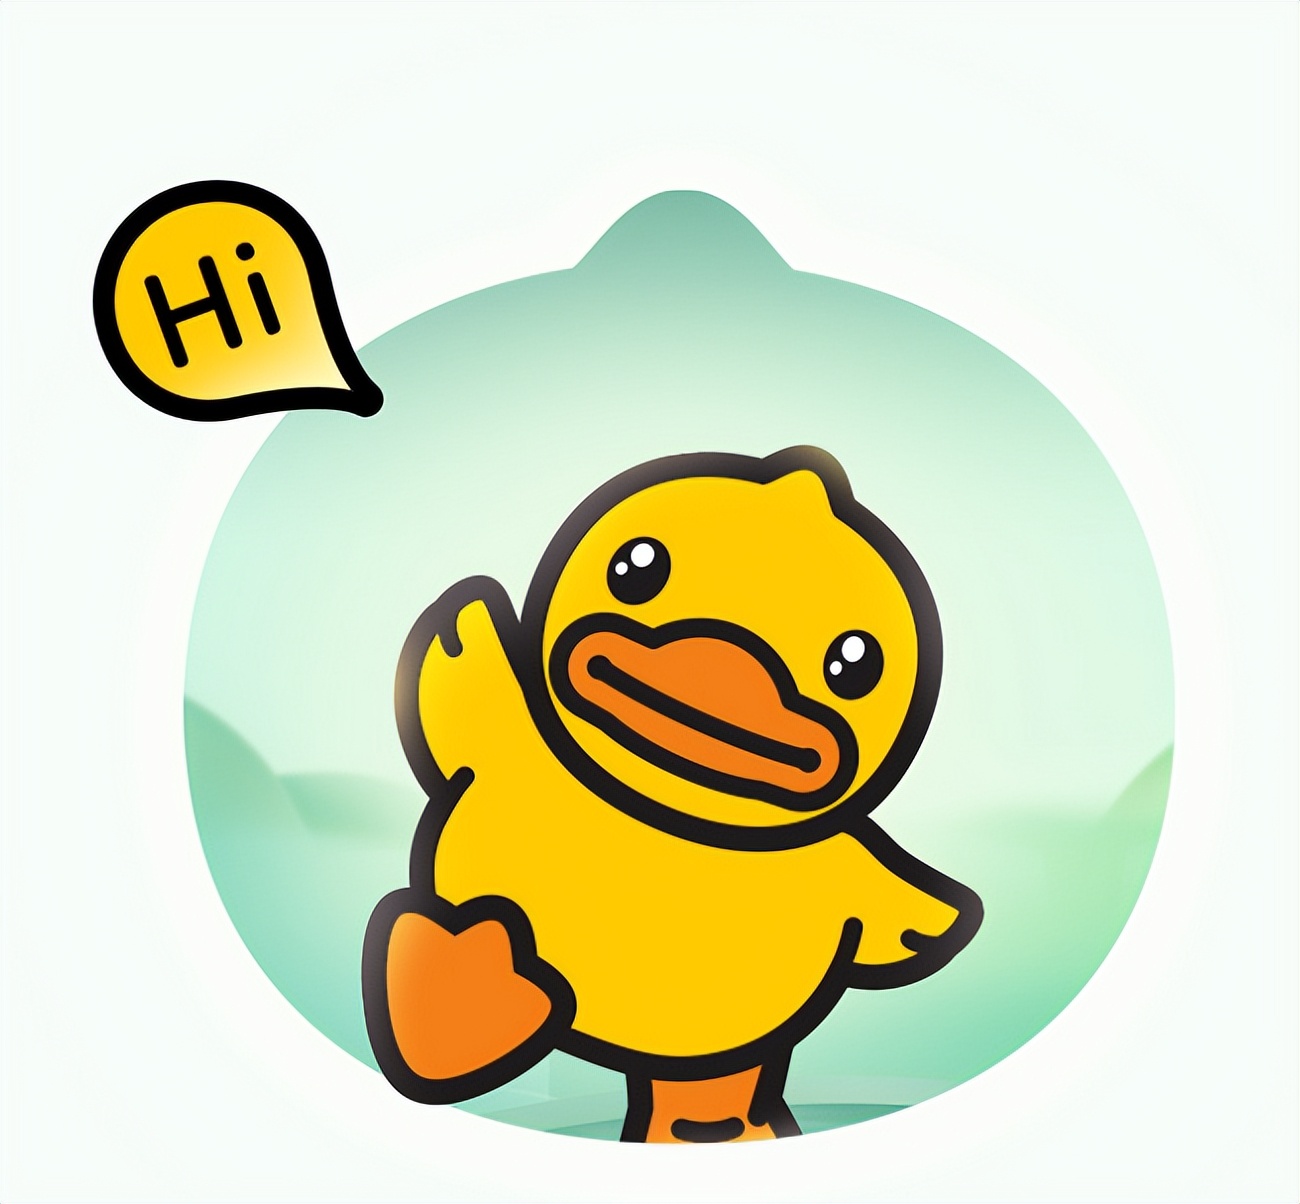 duck 小黄鸭作为全球知名的品牌,不仅是大家熟悉的卡通形象,也是快乐